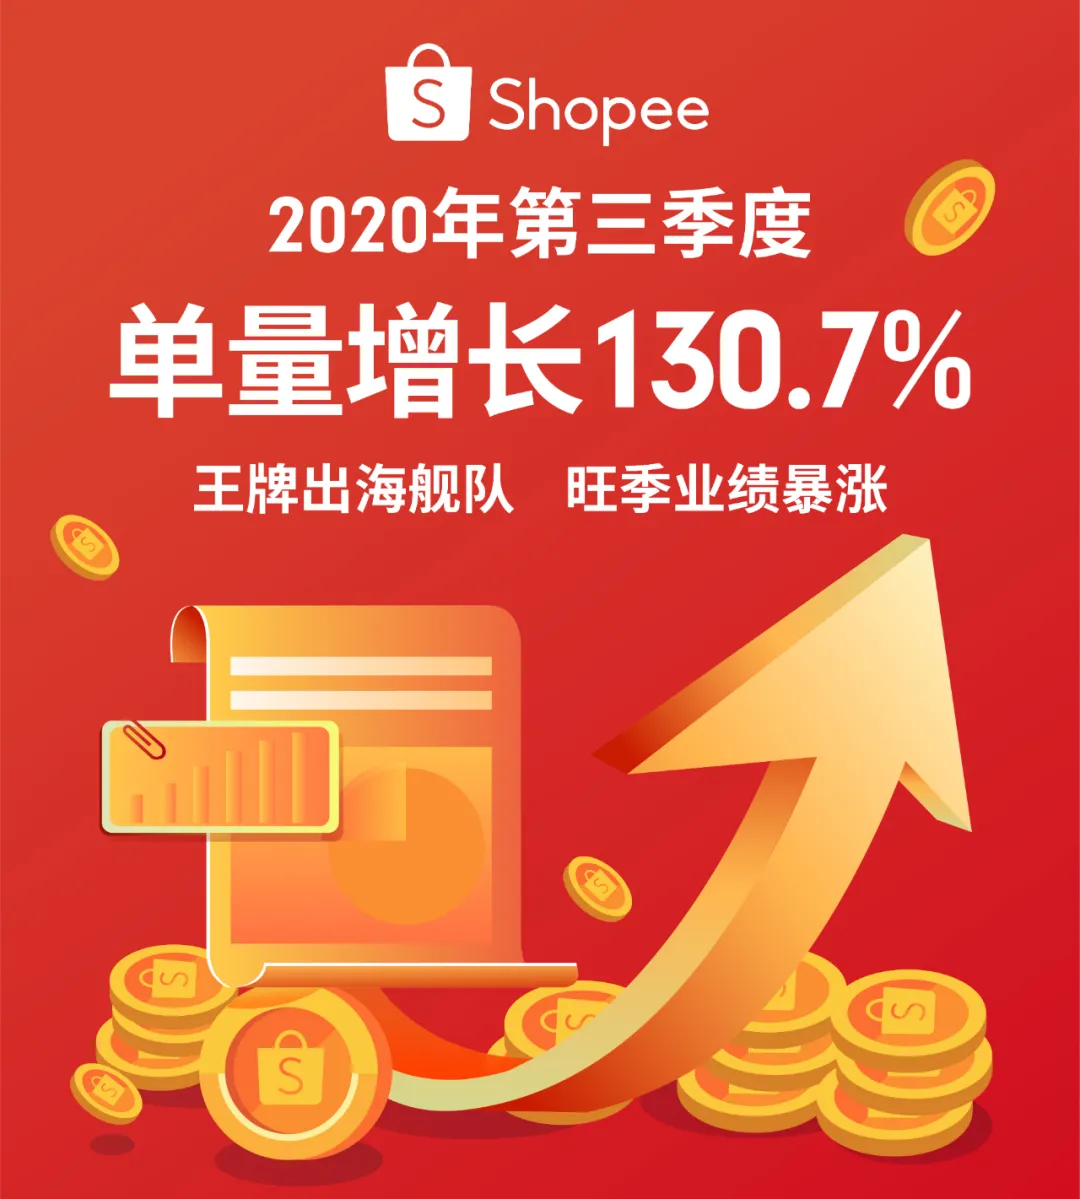 Shopee 2020 Q3订单增长130.7%, 12.12大促日历与爆品乘胜追击!